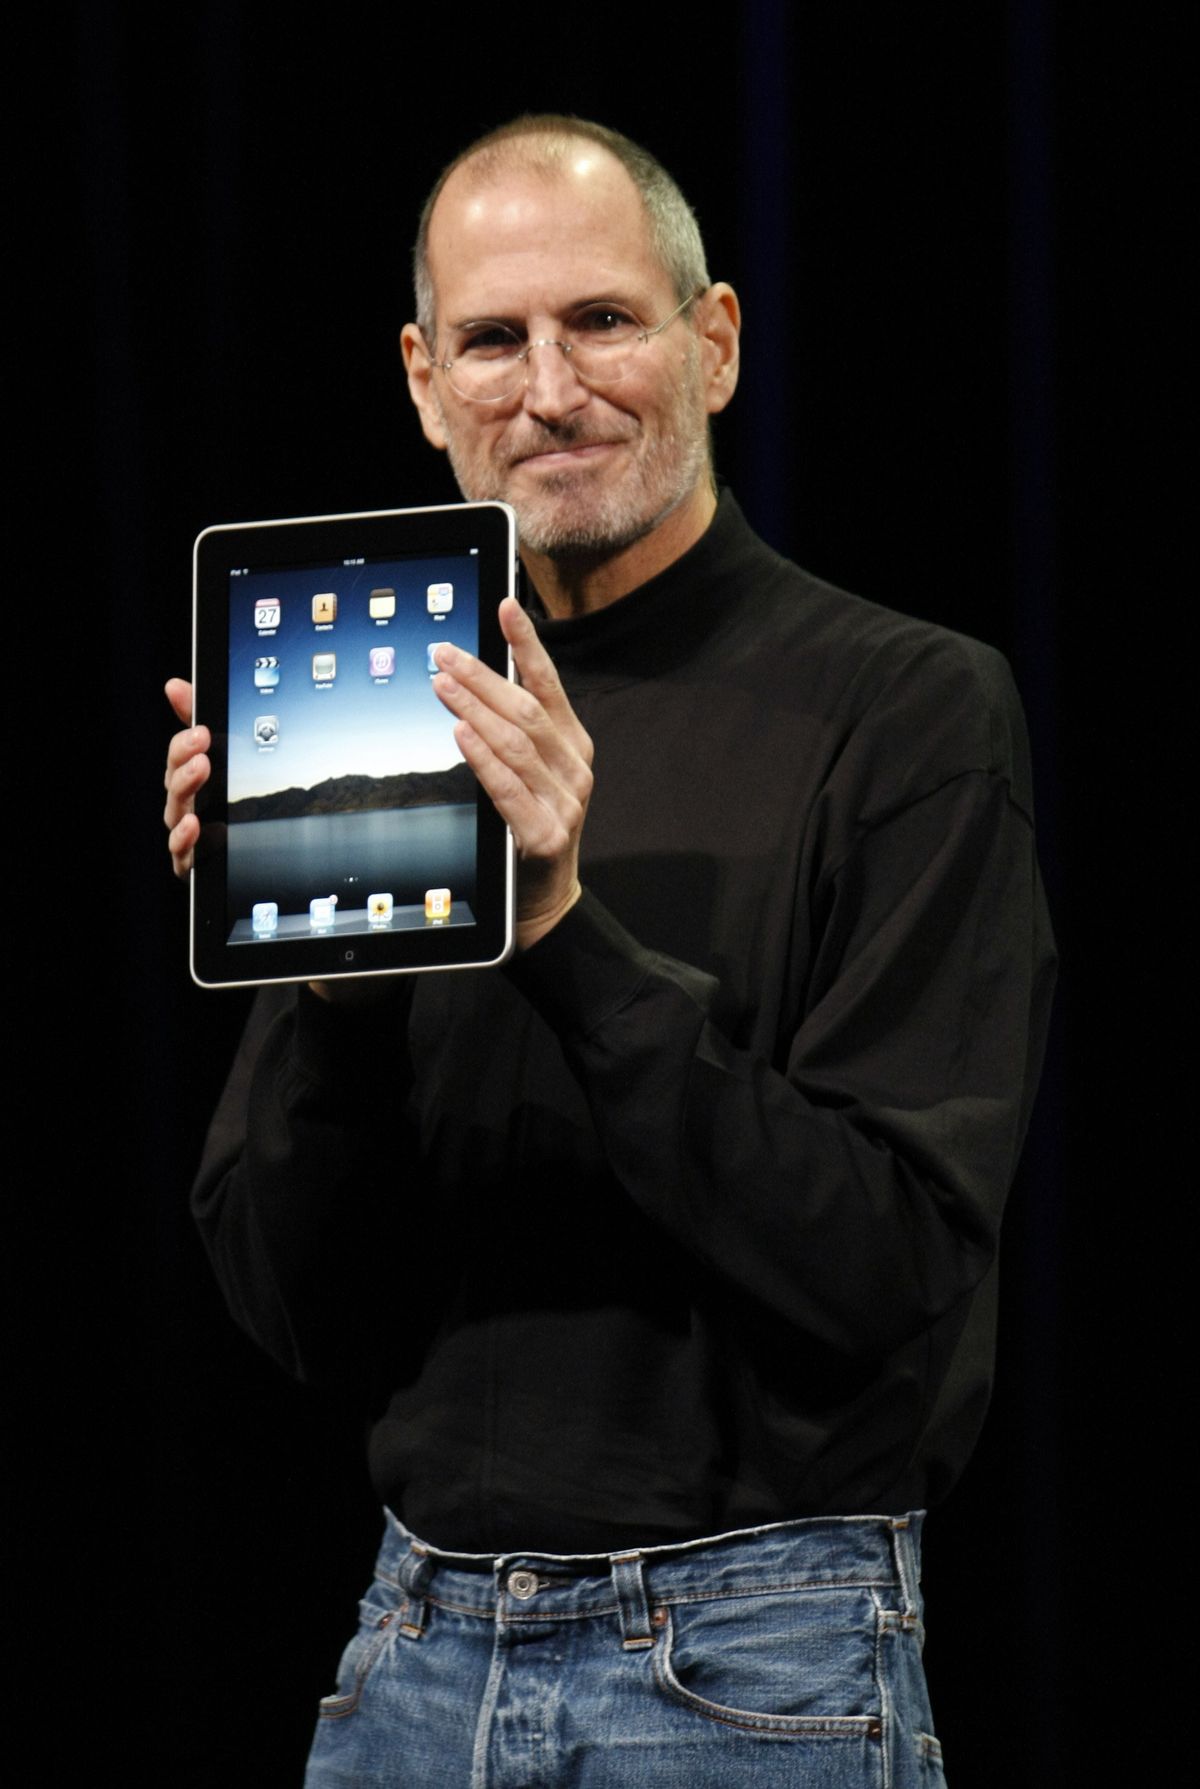 Apple CEO Steve Jobs shows off the new iPad during an Apple event in San Francisco on Wednesday, Jan. 27, 2010. (Paul Sakuma / Associated Press)